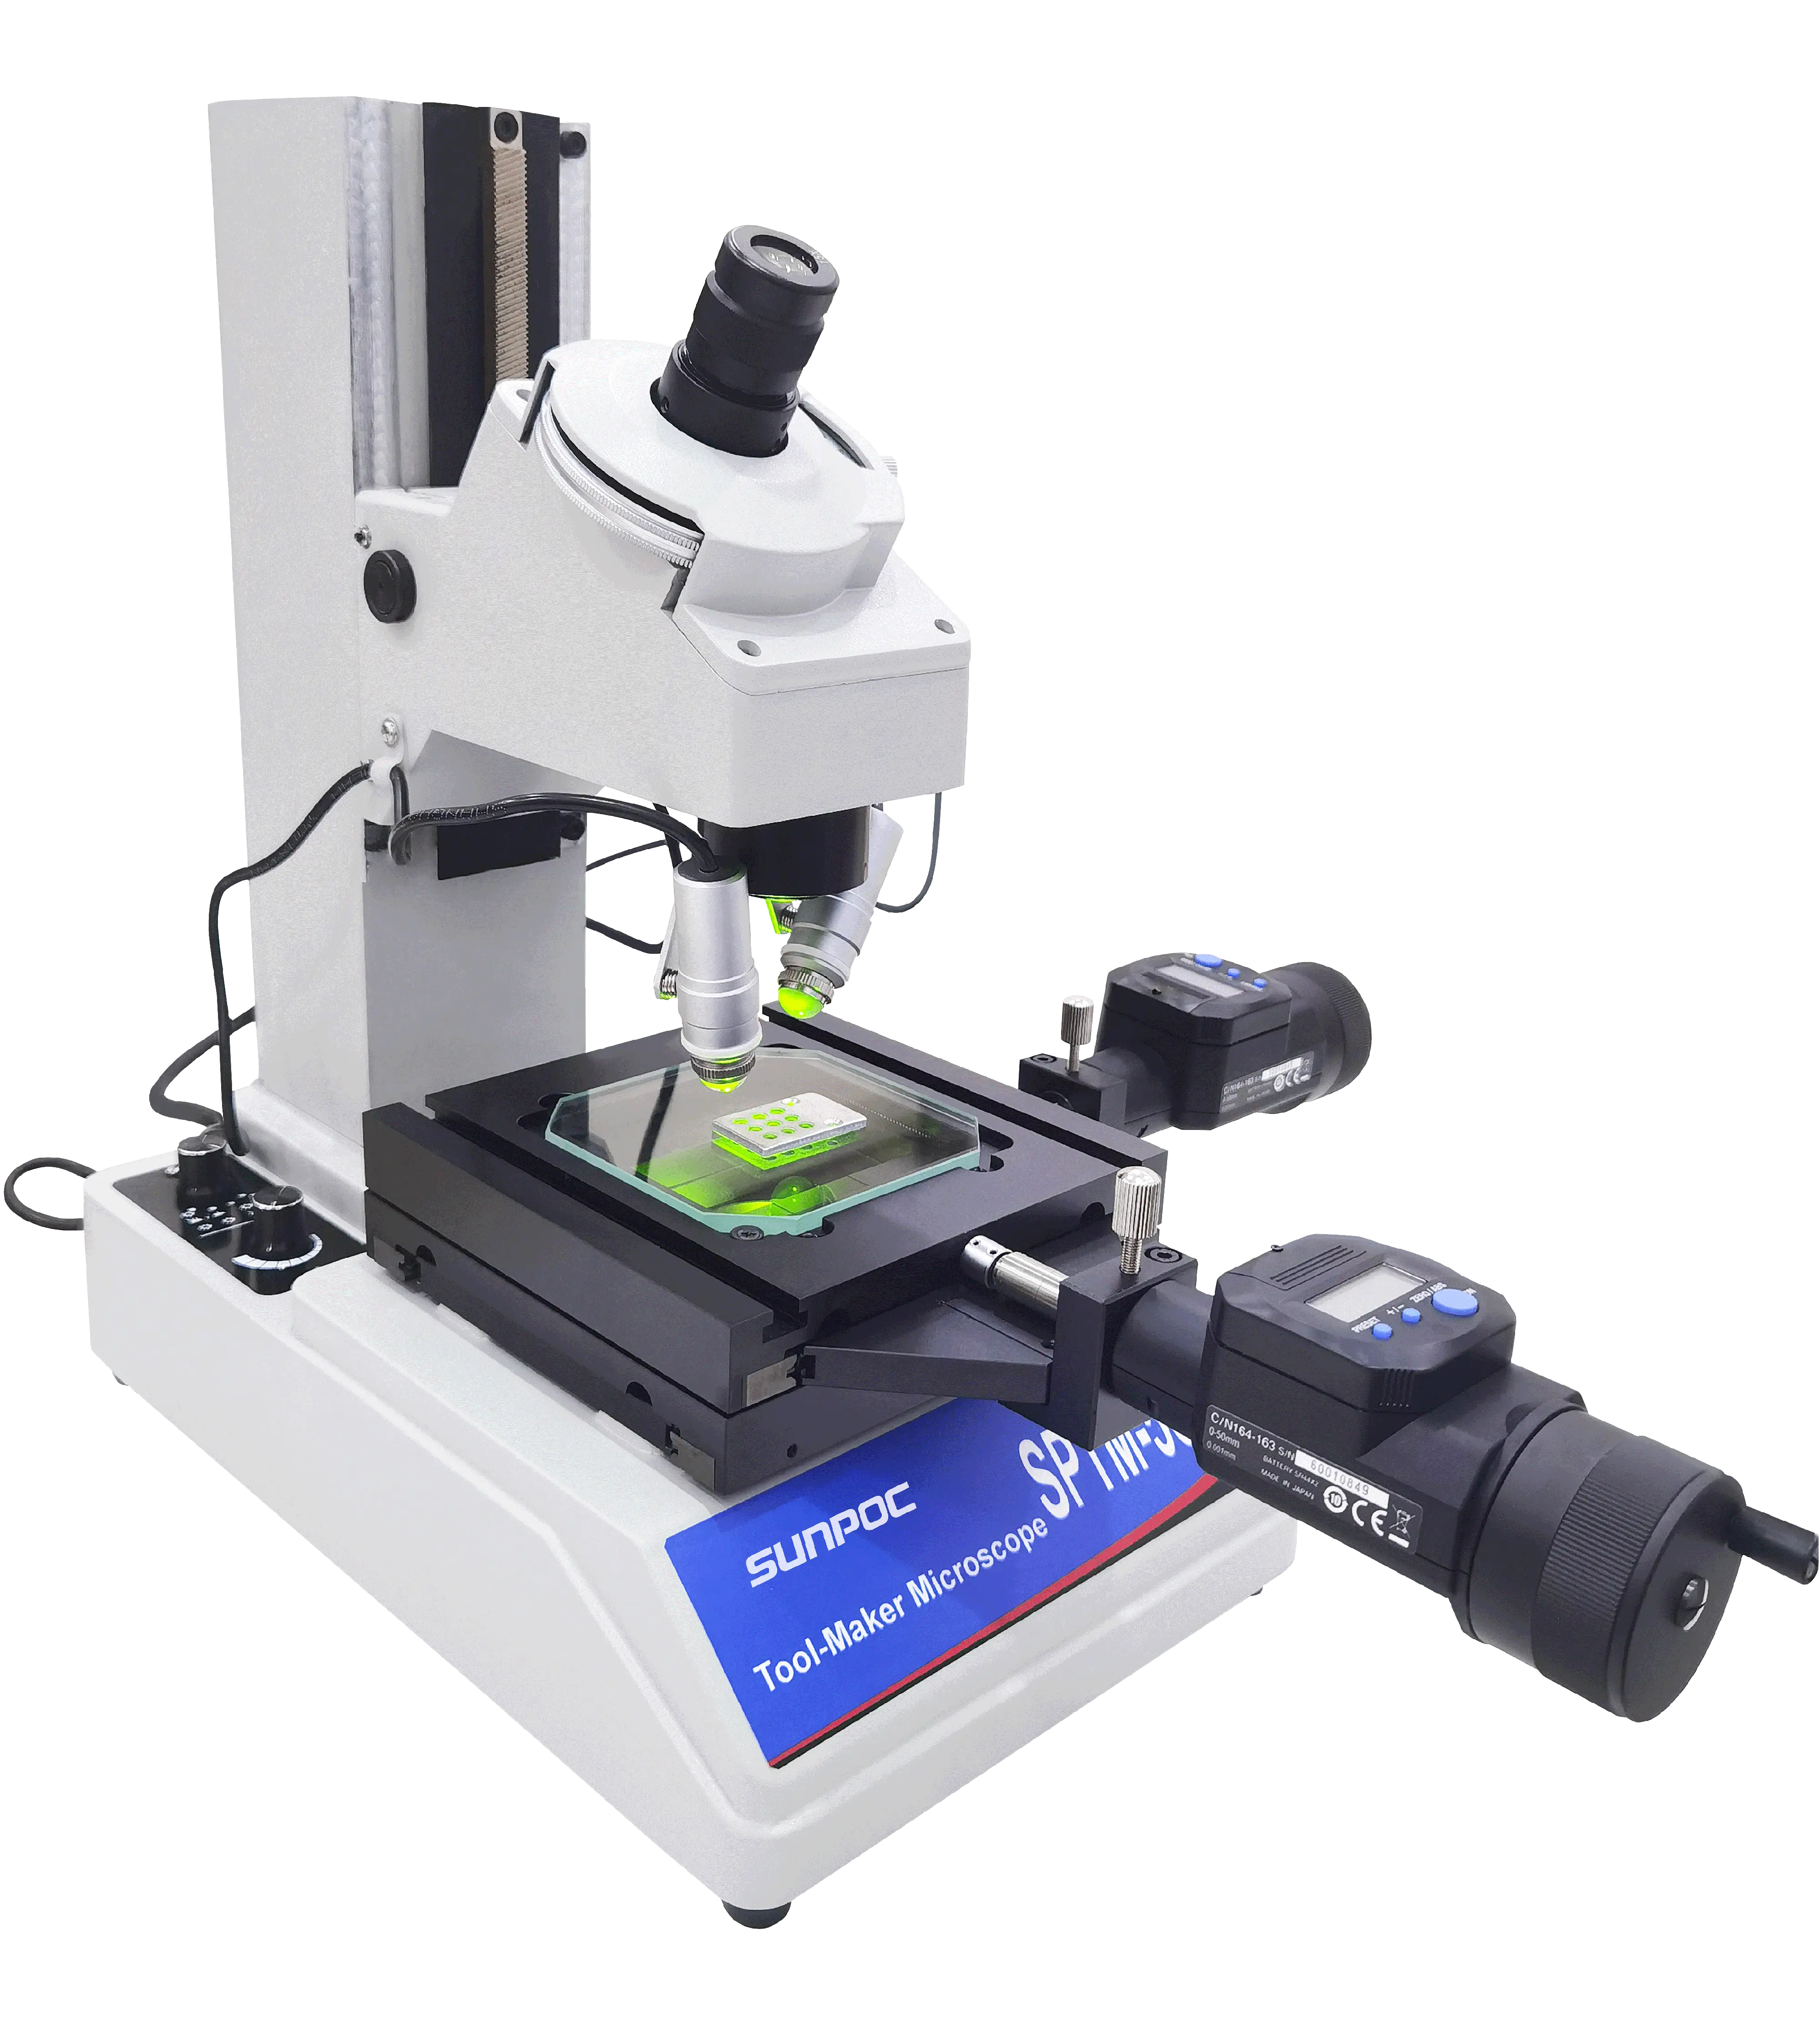 Kaisi Universal Tool maker Inspection Microscope Metallurgical Toolmaker Measuring Microscope